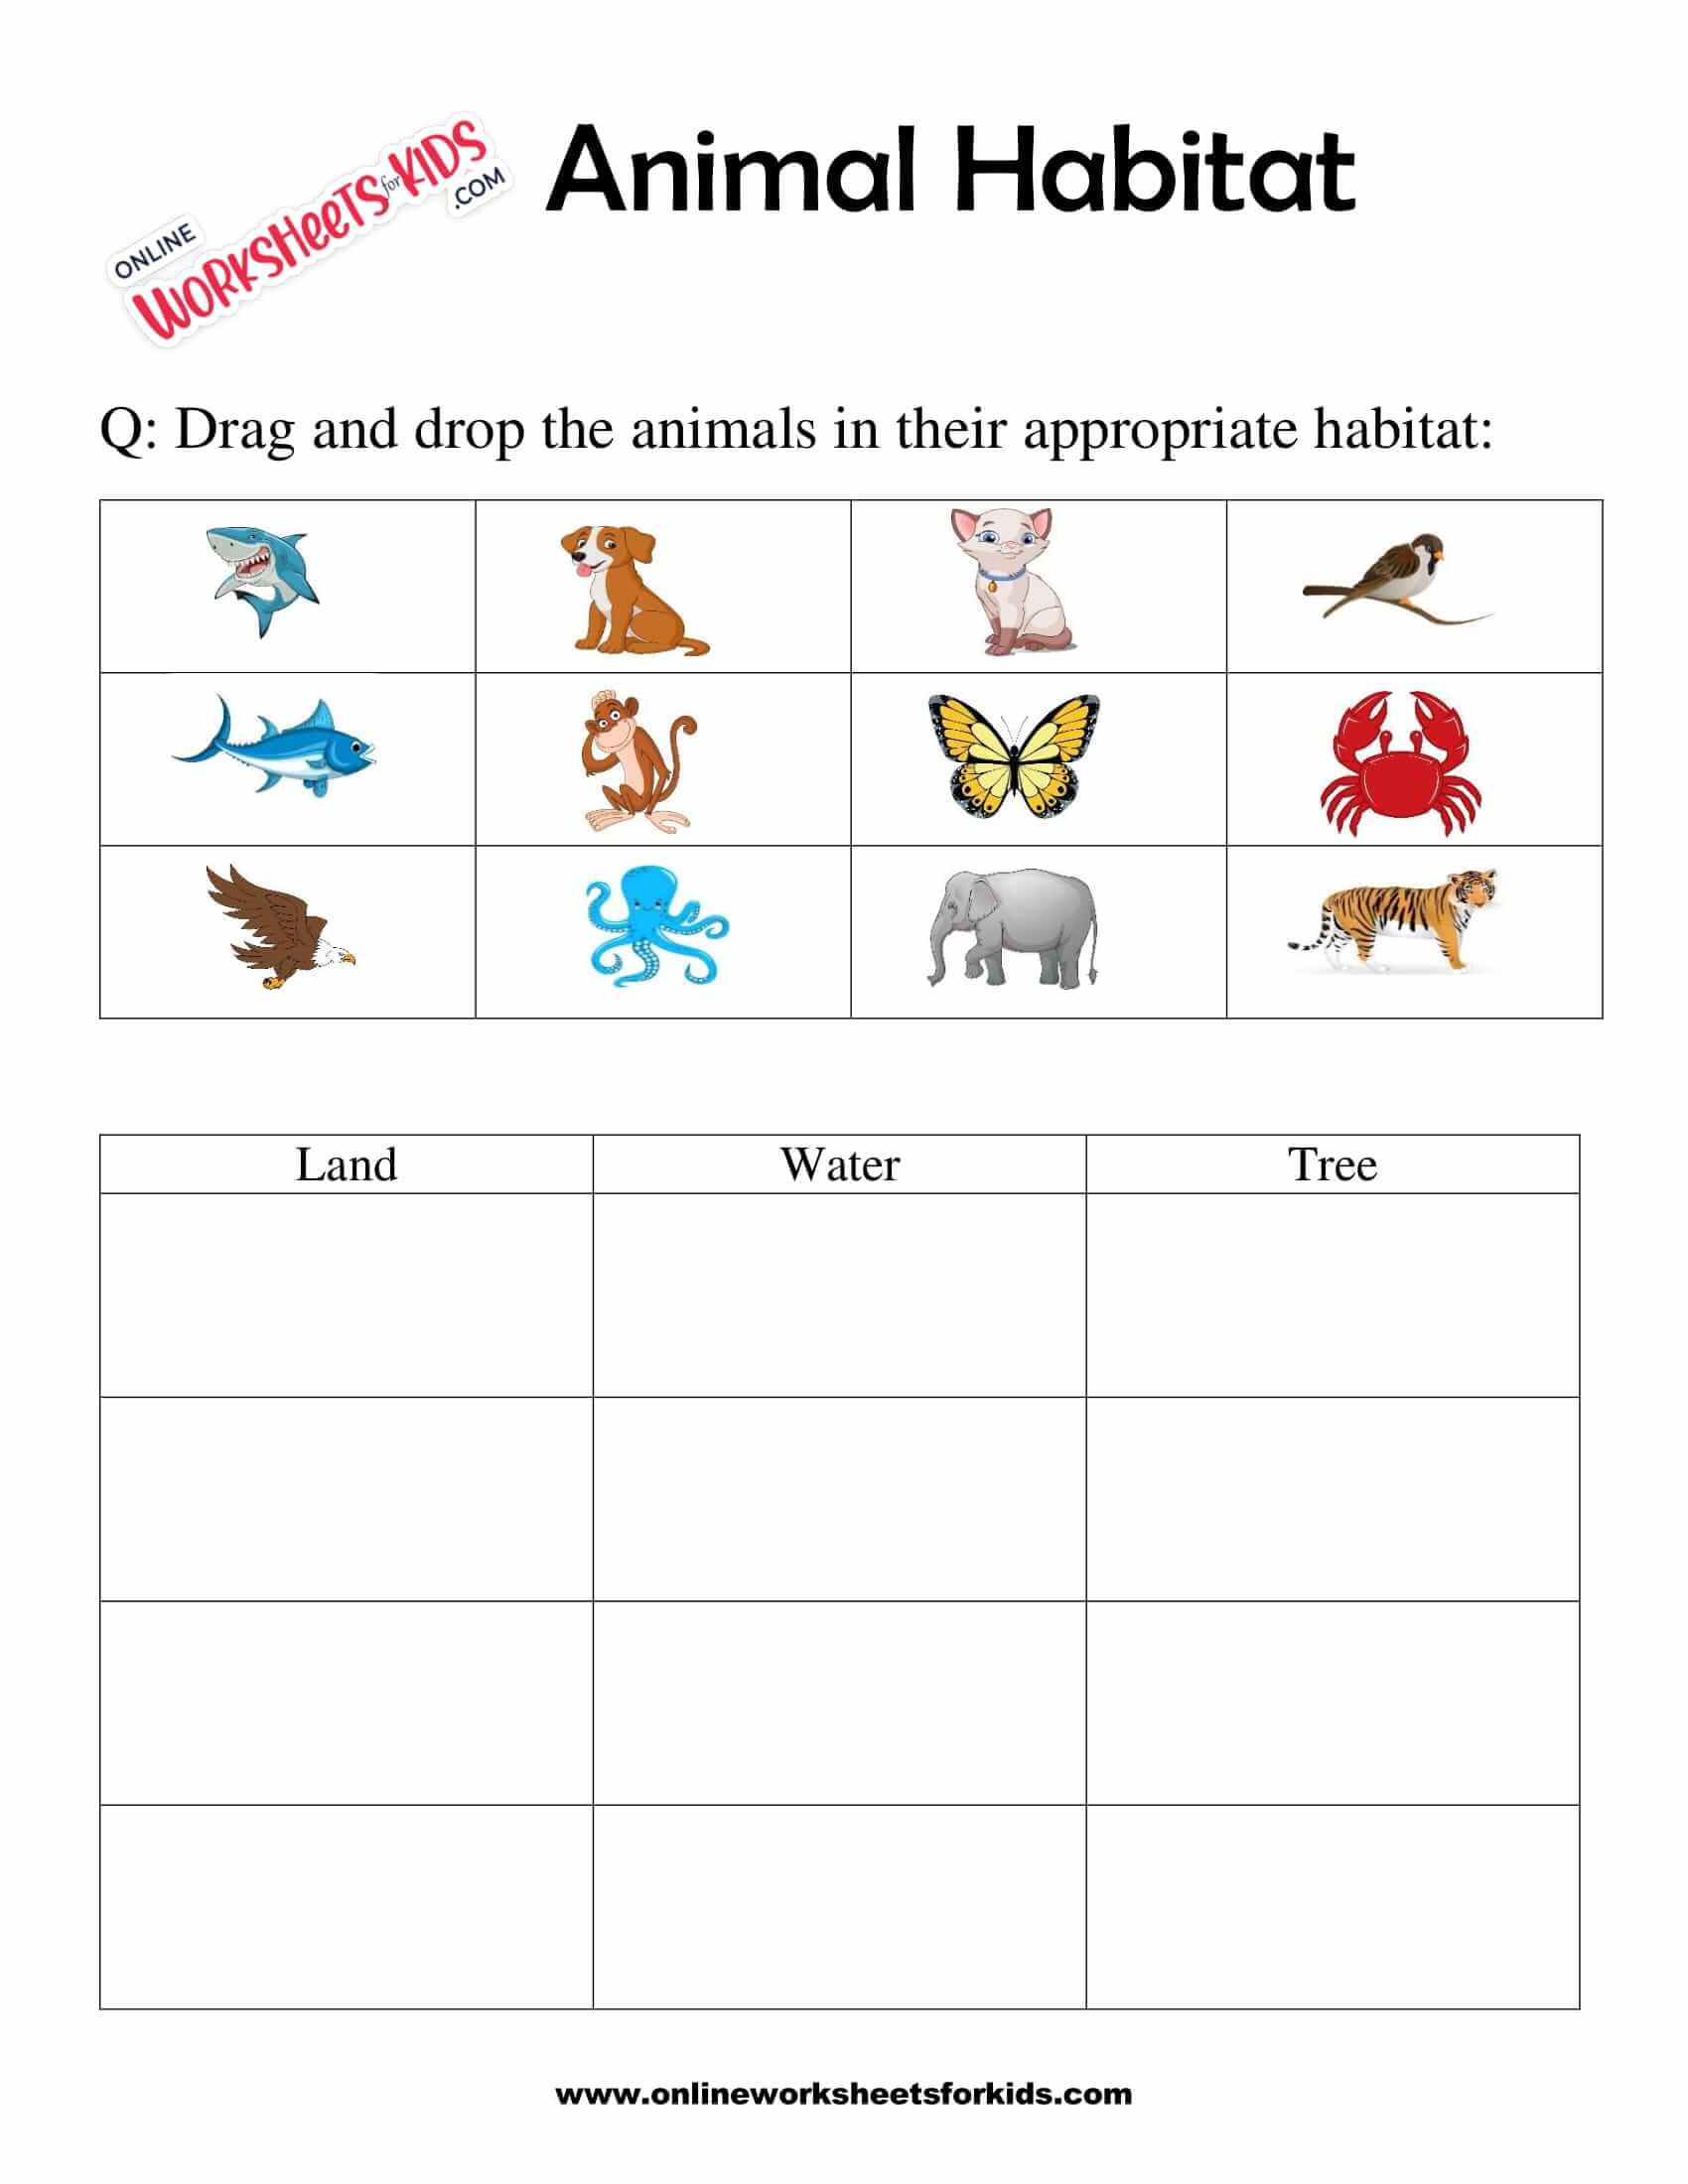 animal-habitats-worksheet-k5-learning-animal-habitats-worksheets-k5